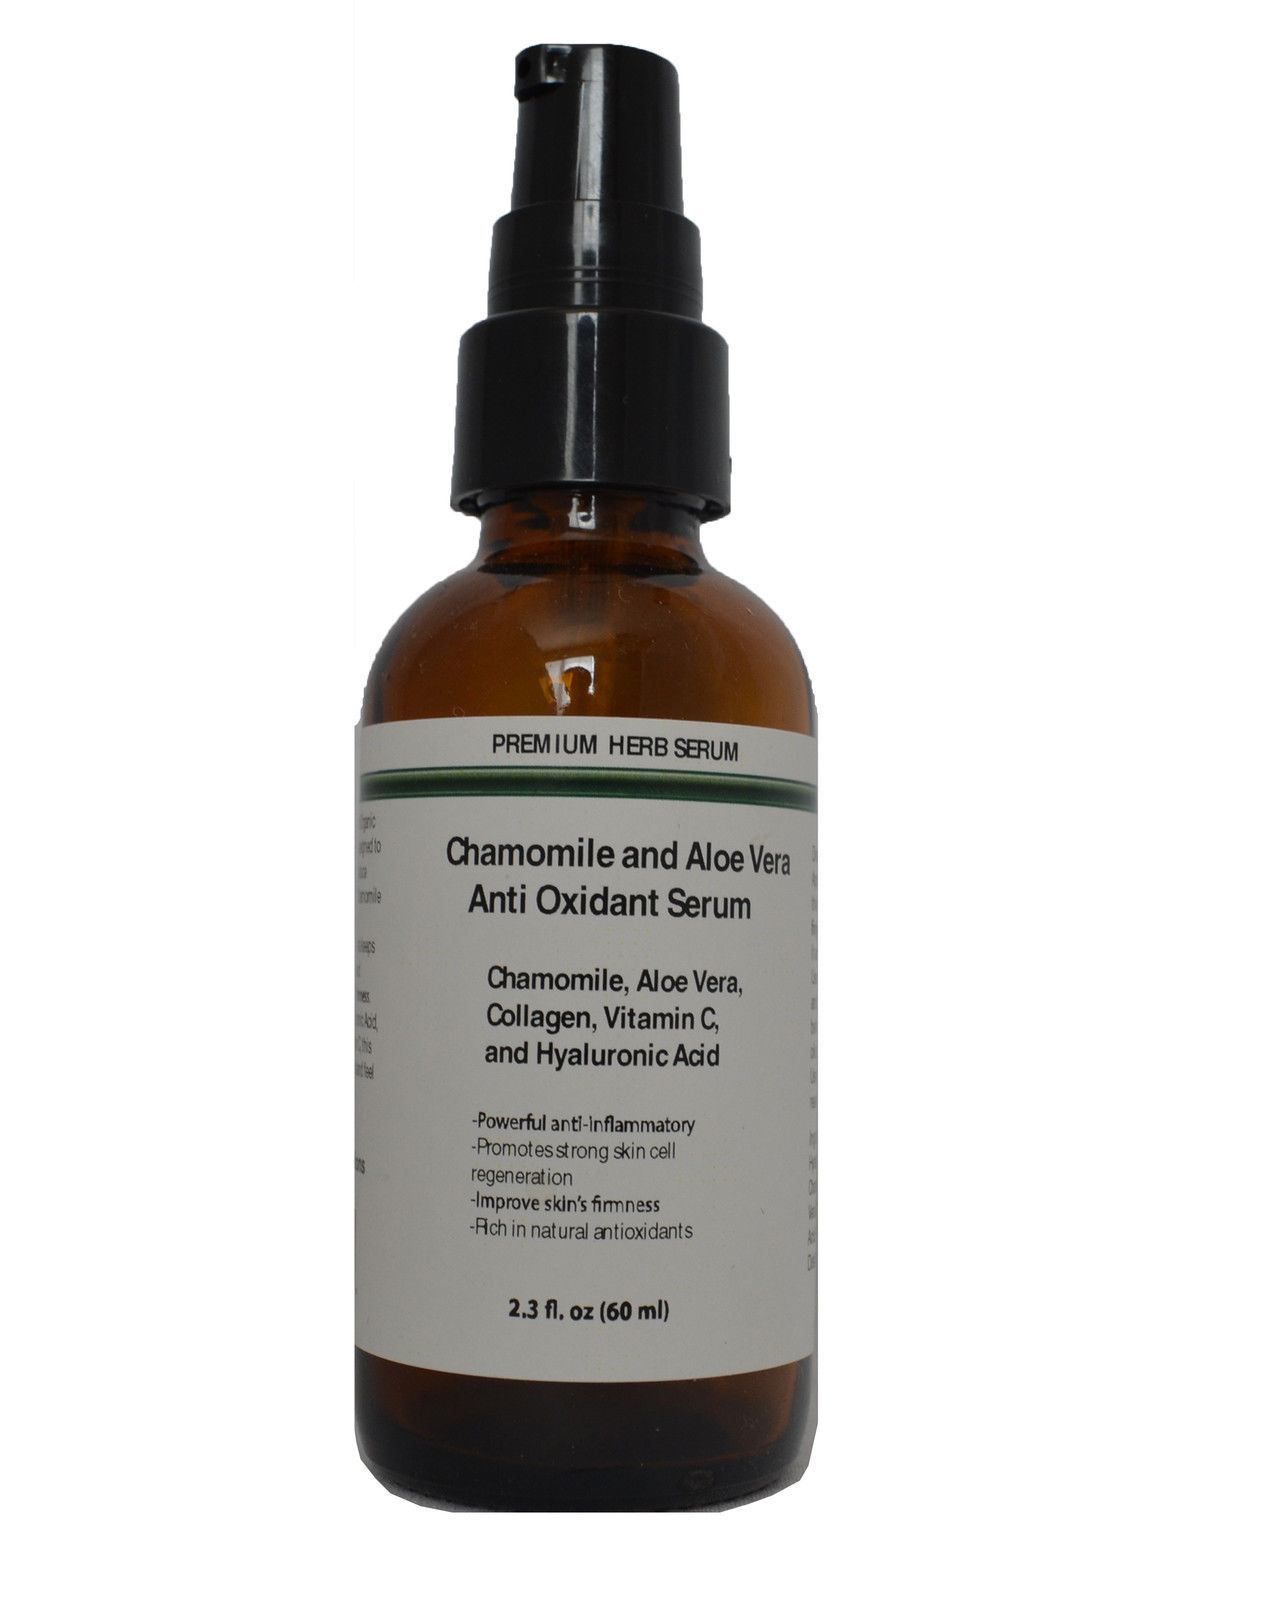 Chamomile and Aloe Vera,Vitamin C,Hyaluronic Acid Anti Oxidant Serum 2.3 oz - $28.66